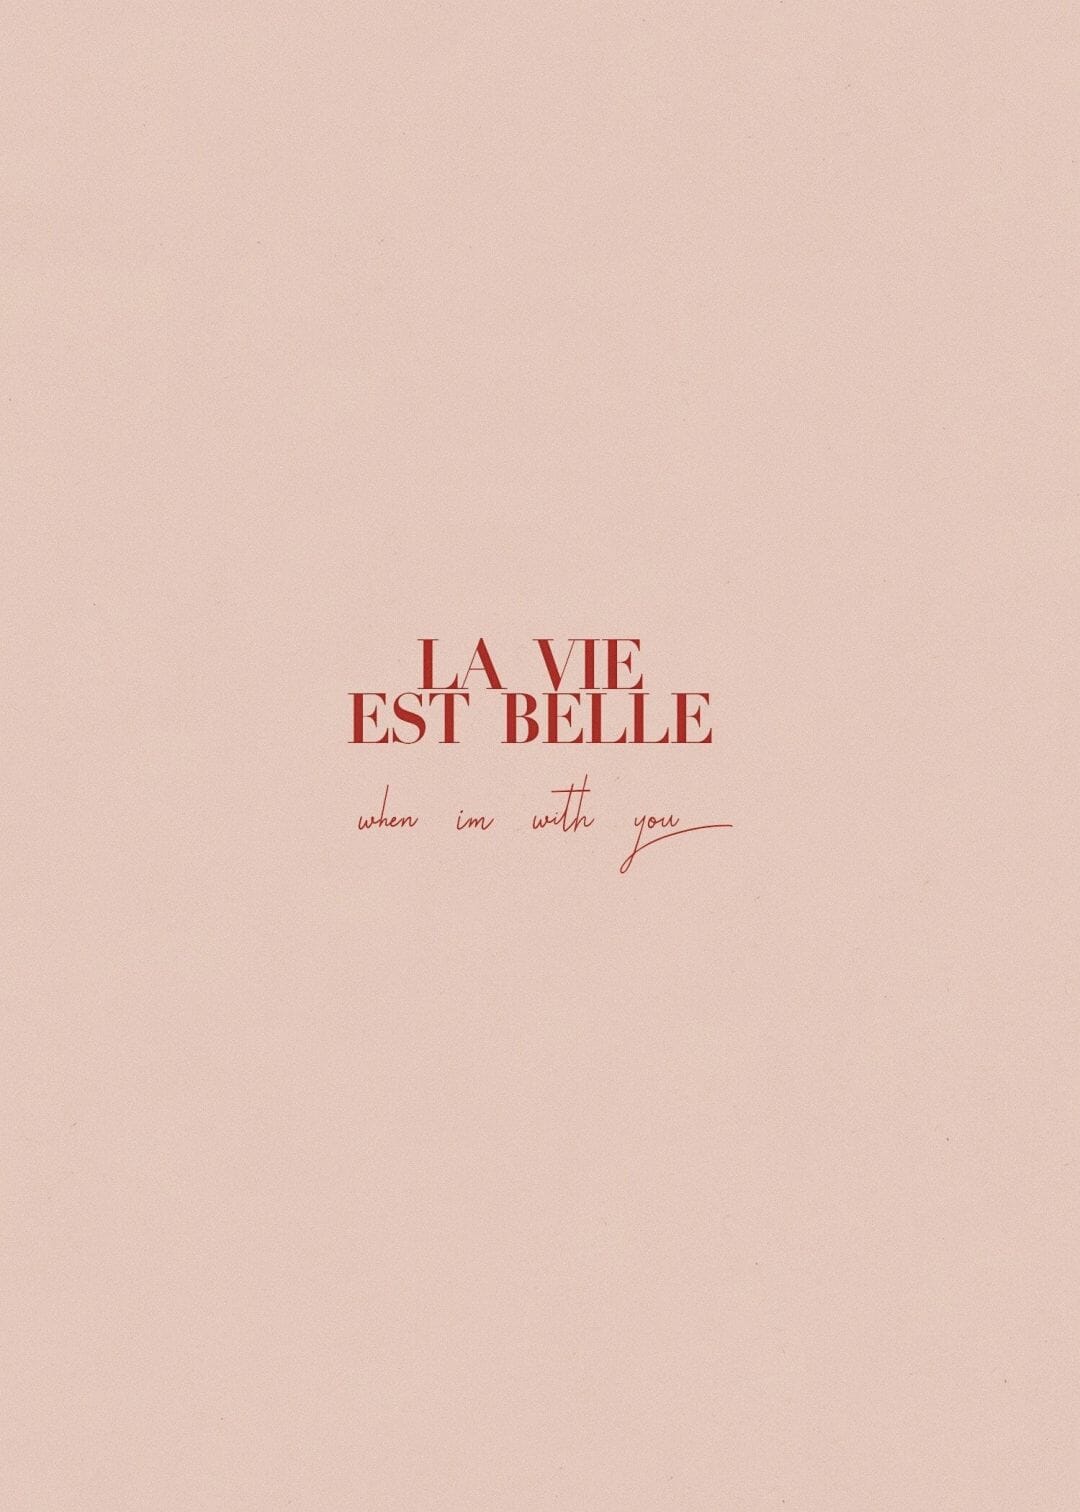 La Vie est Belle. Wallpaper. Words wallpaper, iPhone